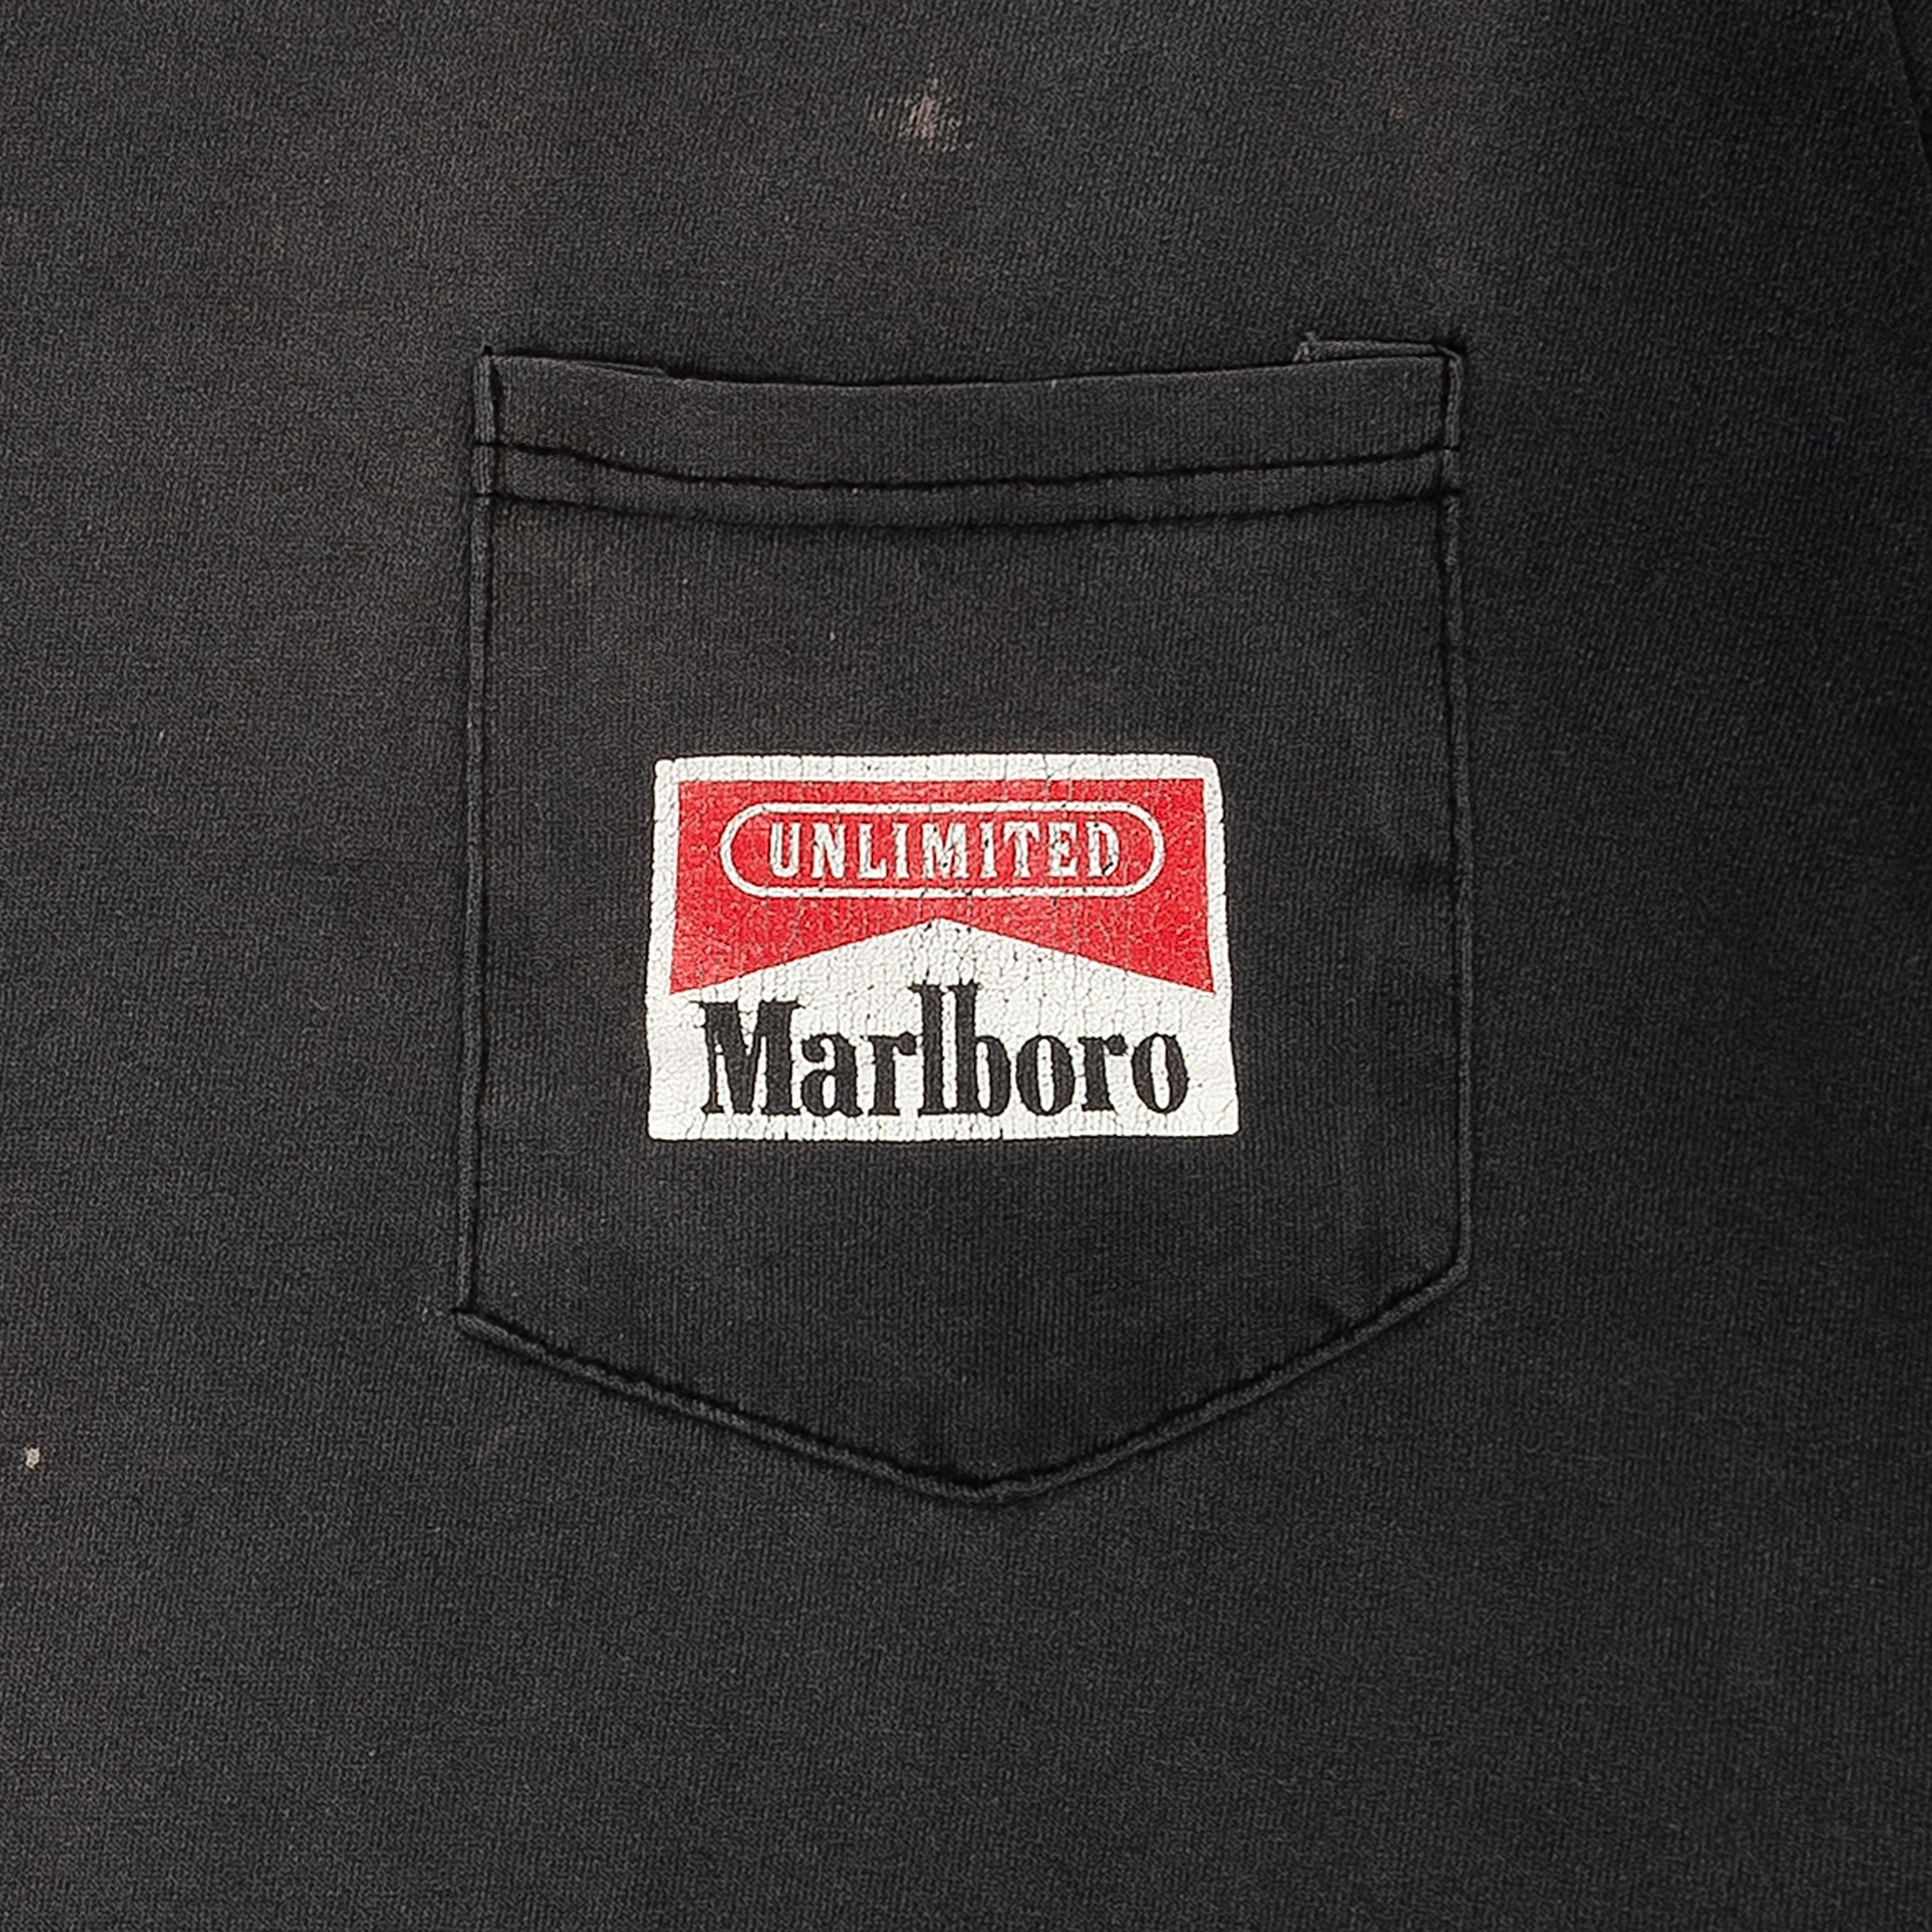 Marlboro Cigarettes Train Gear Faded Pocket Tee Black-PLUS